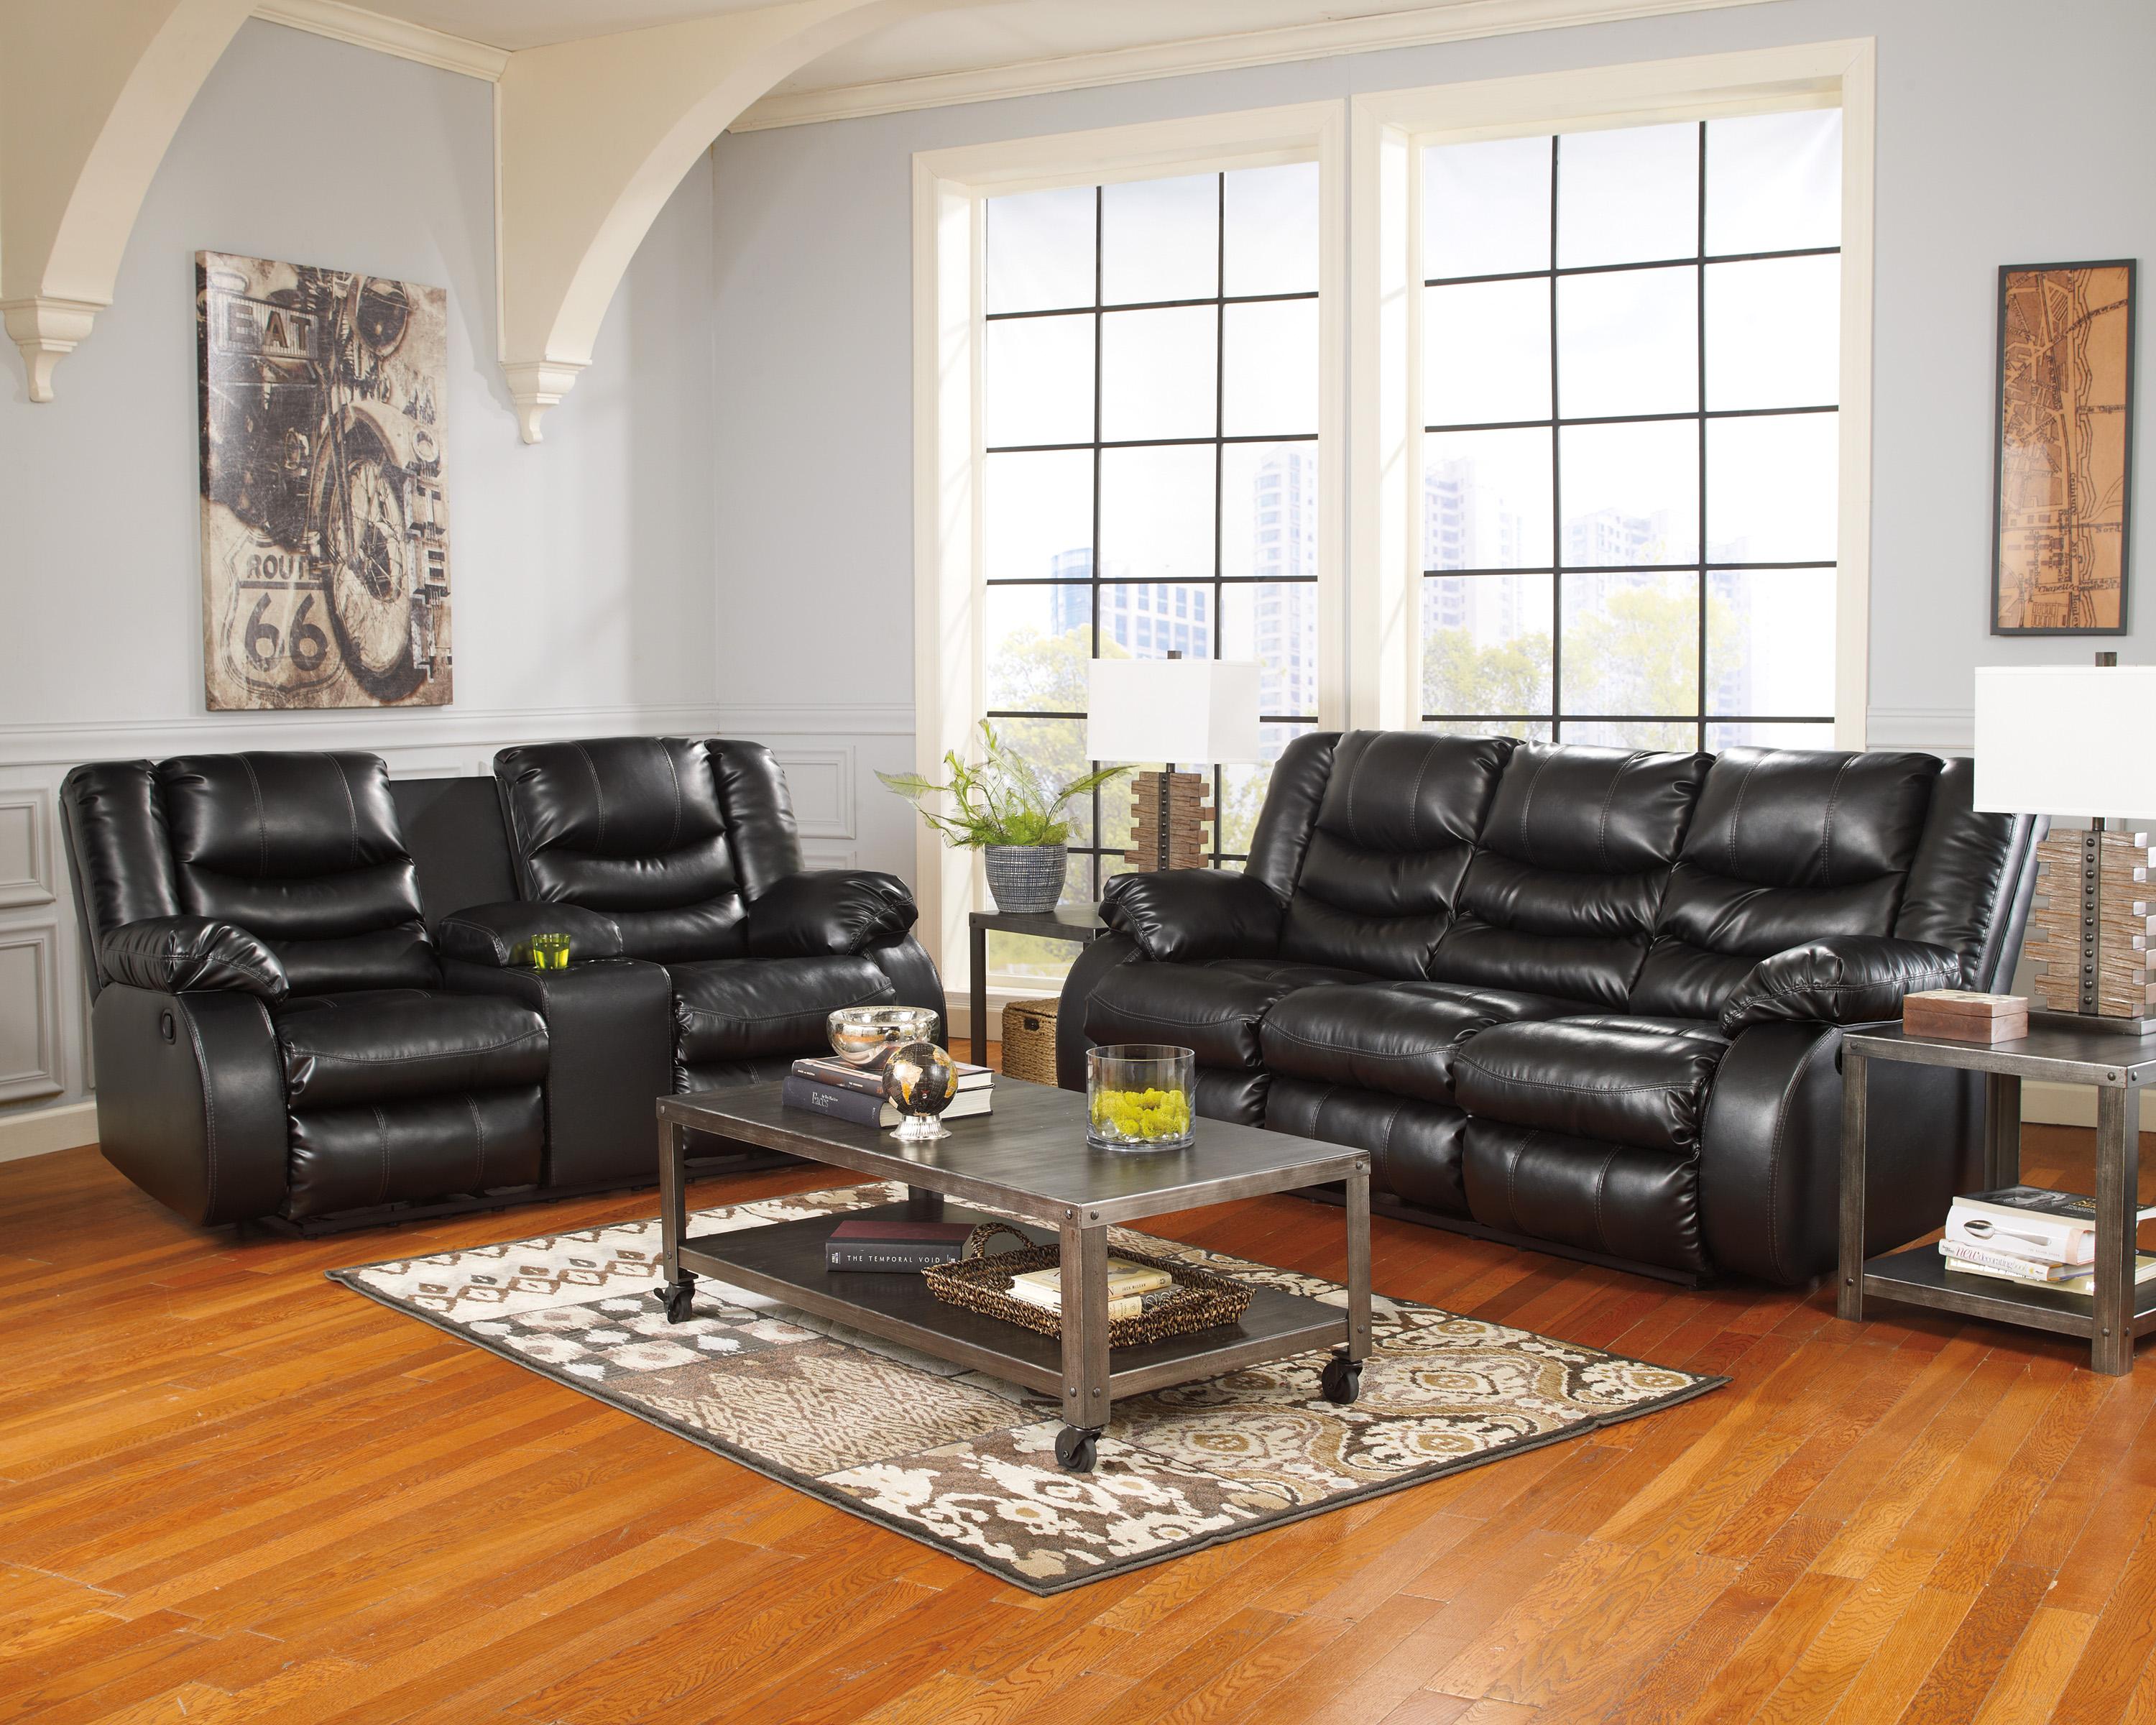 

    
Ashley Linebacker DuraBlend 2 Piece Living Room Set in Black 2387
